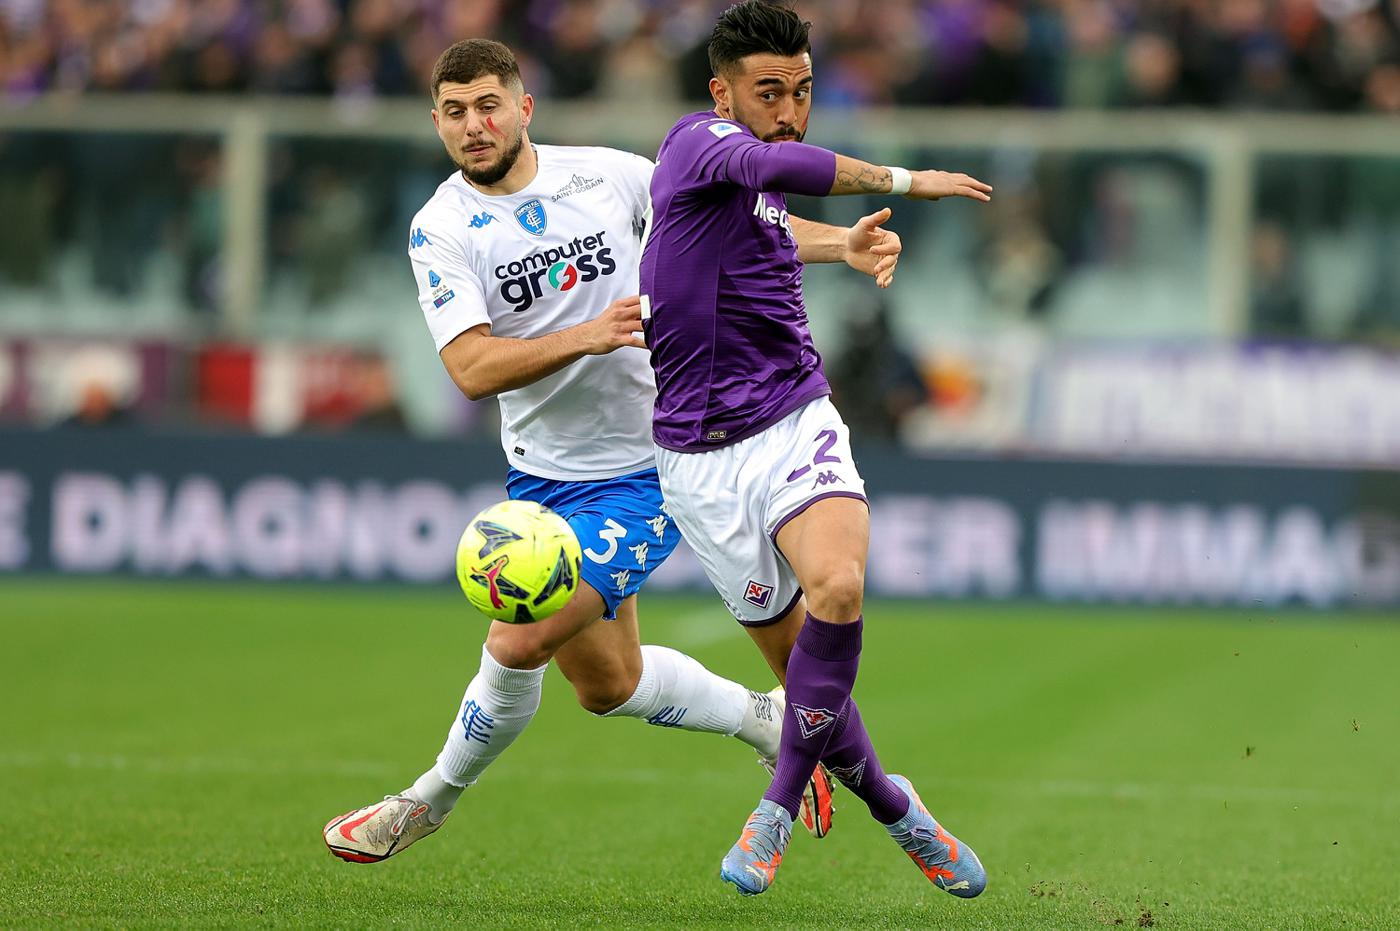 Fiorentina - Empoli - 1:1. Italian Championship, 23rd round. Match review, statistics